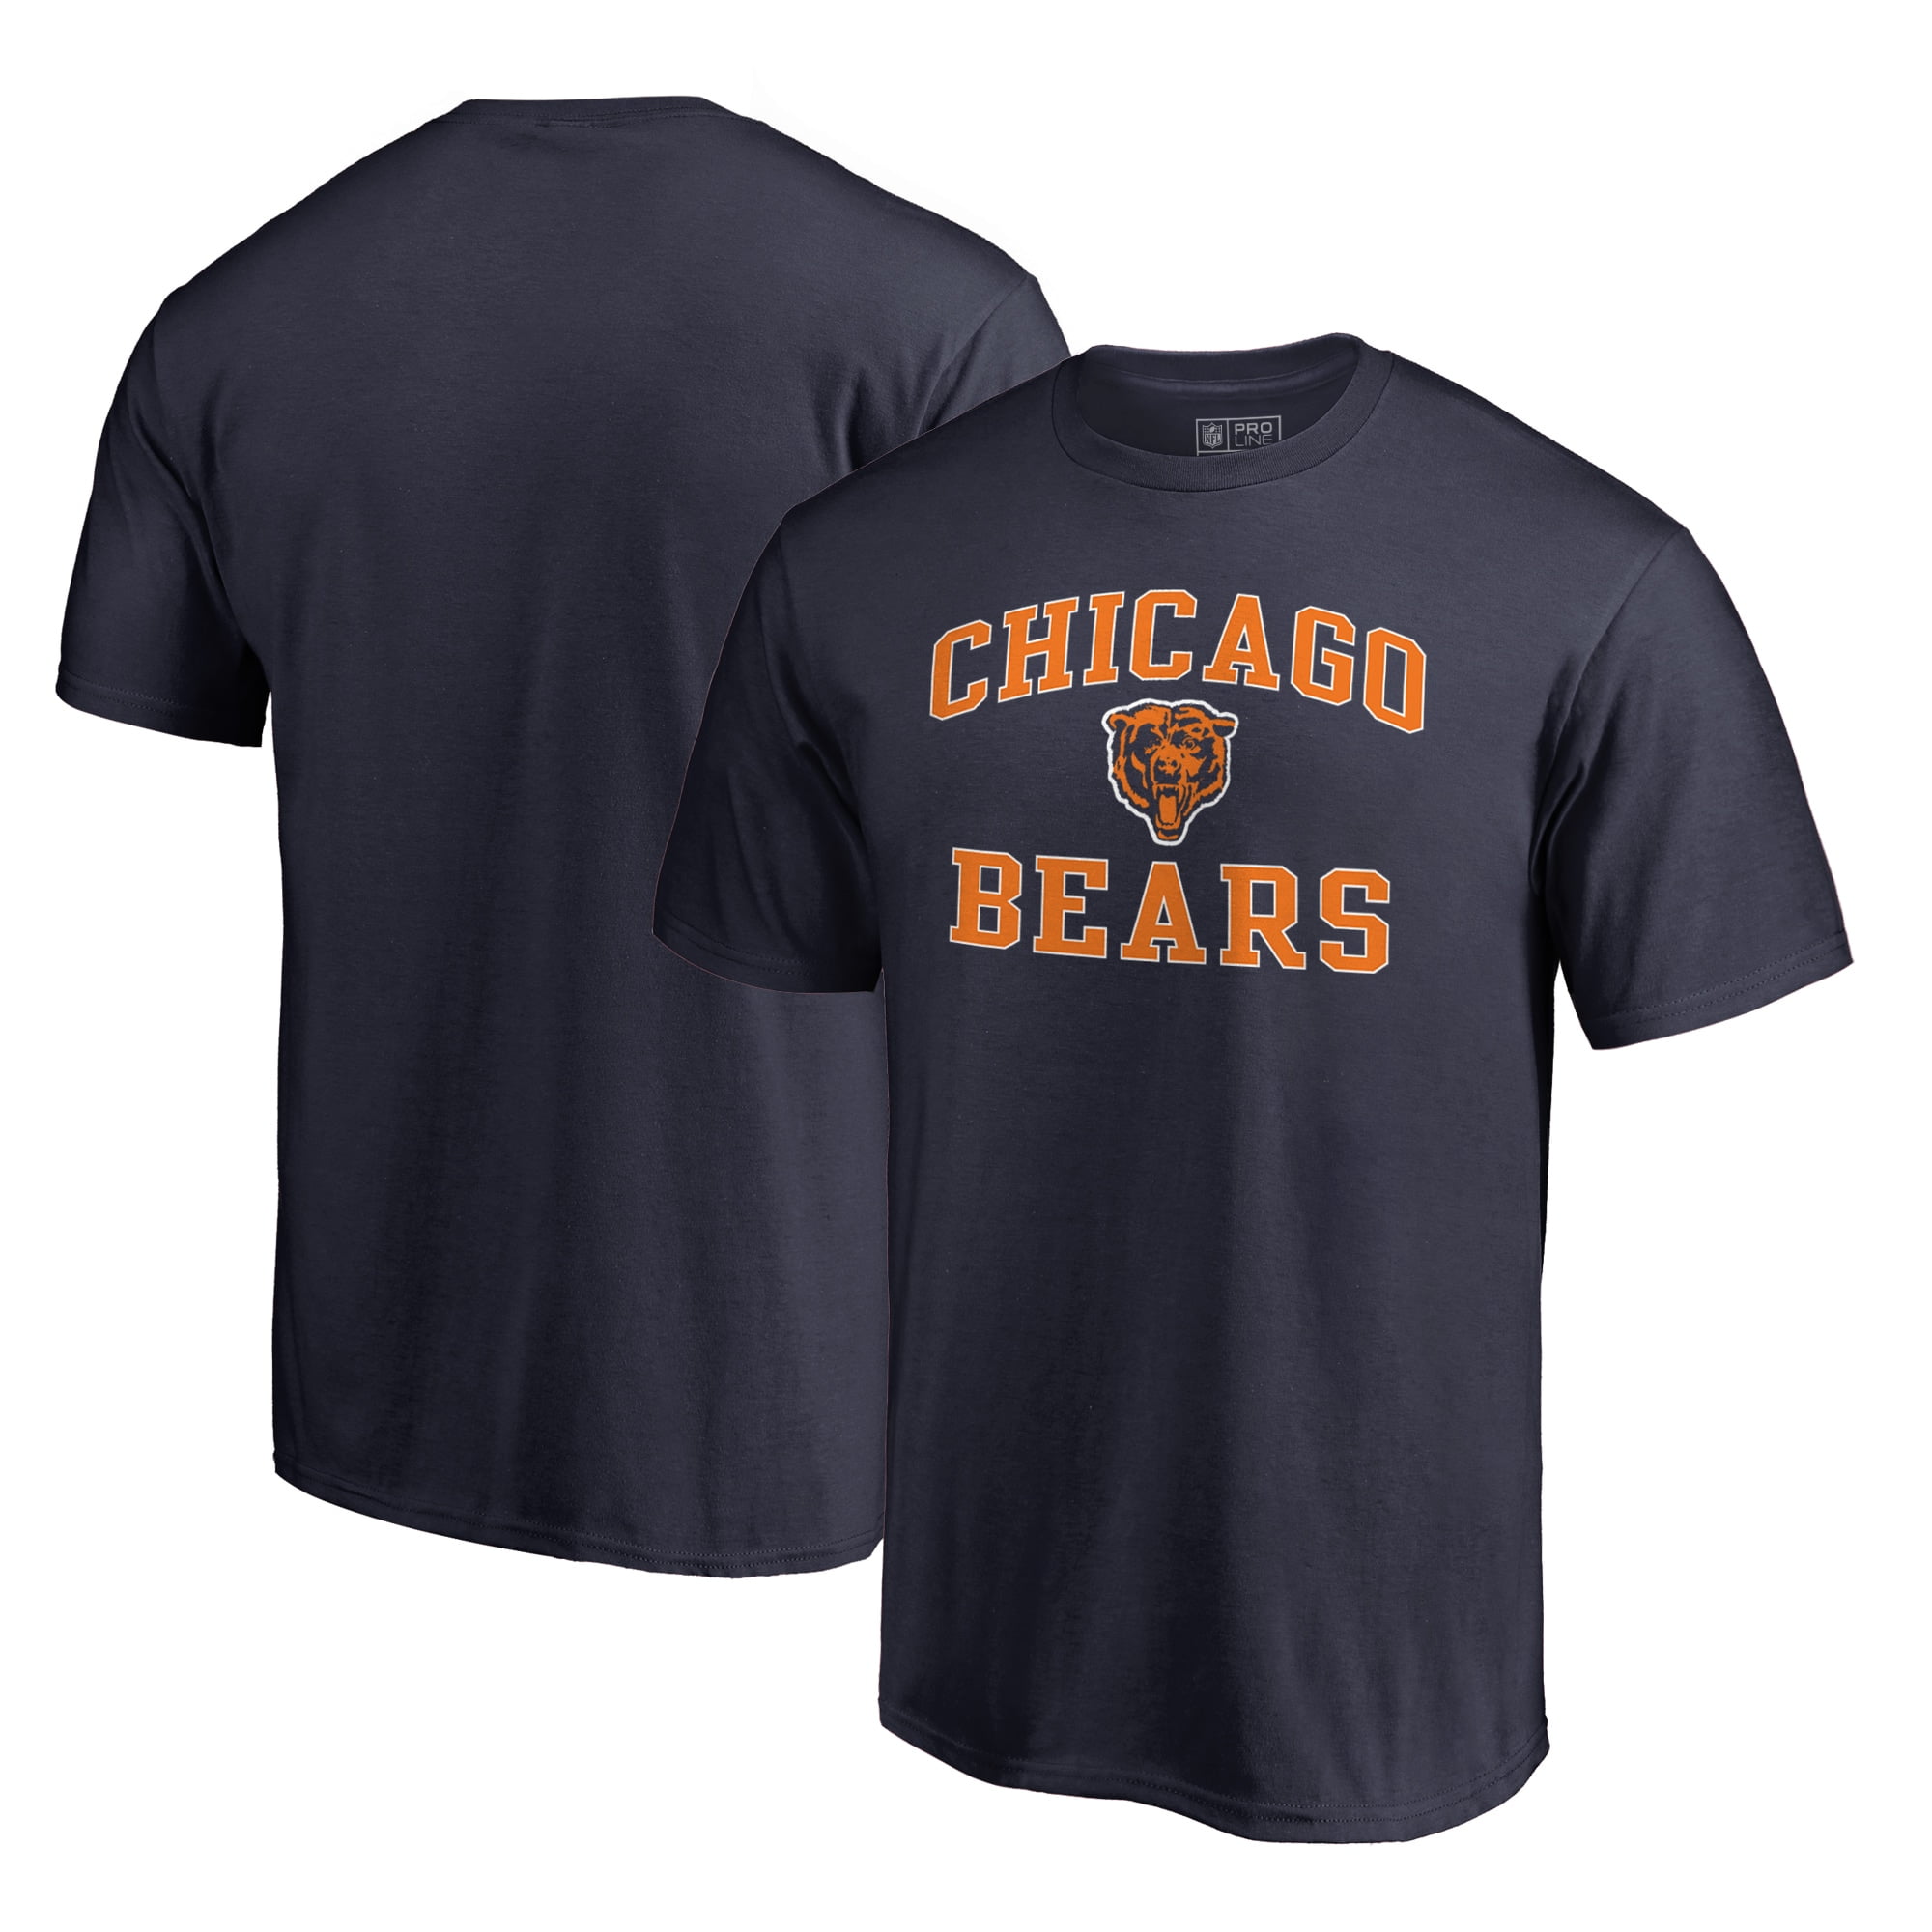 Chicago Bears NFL Pro Line by Fanatics 